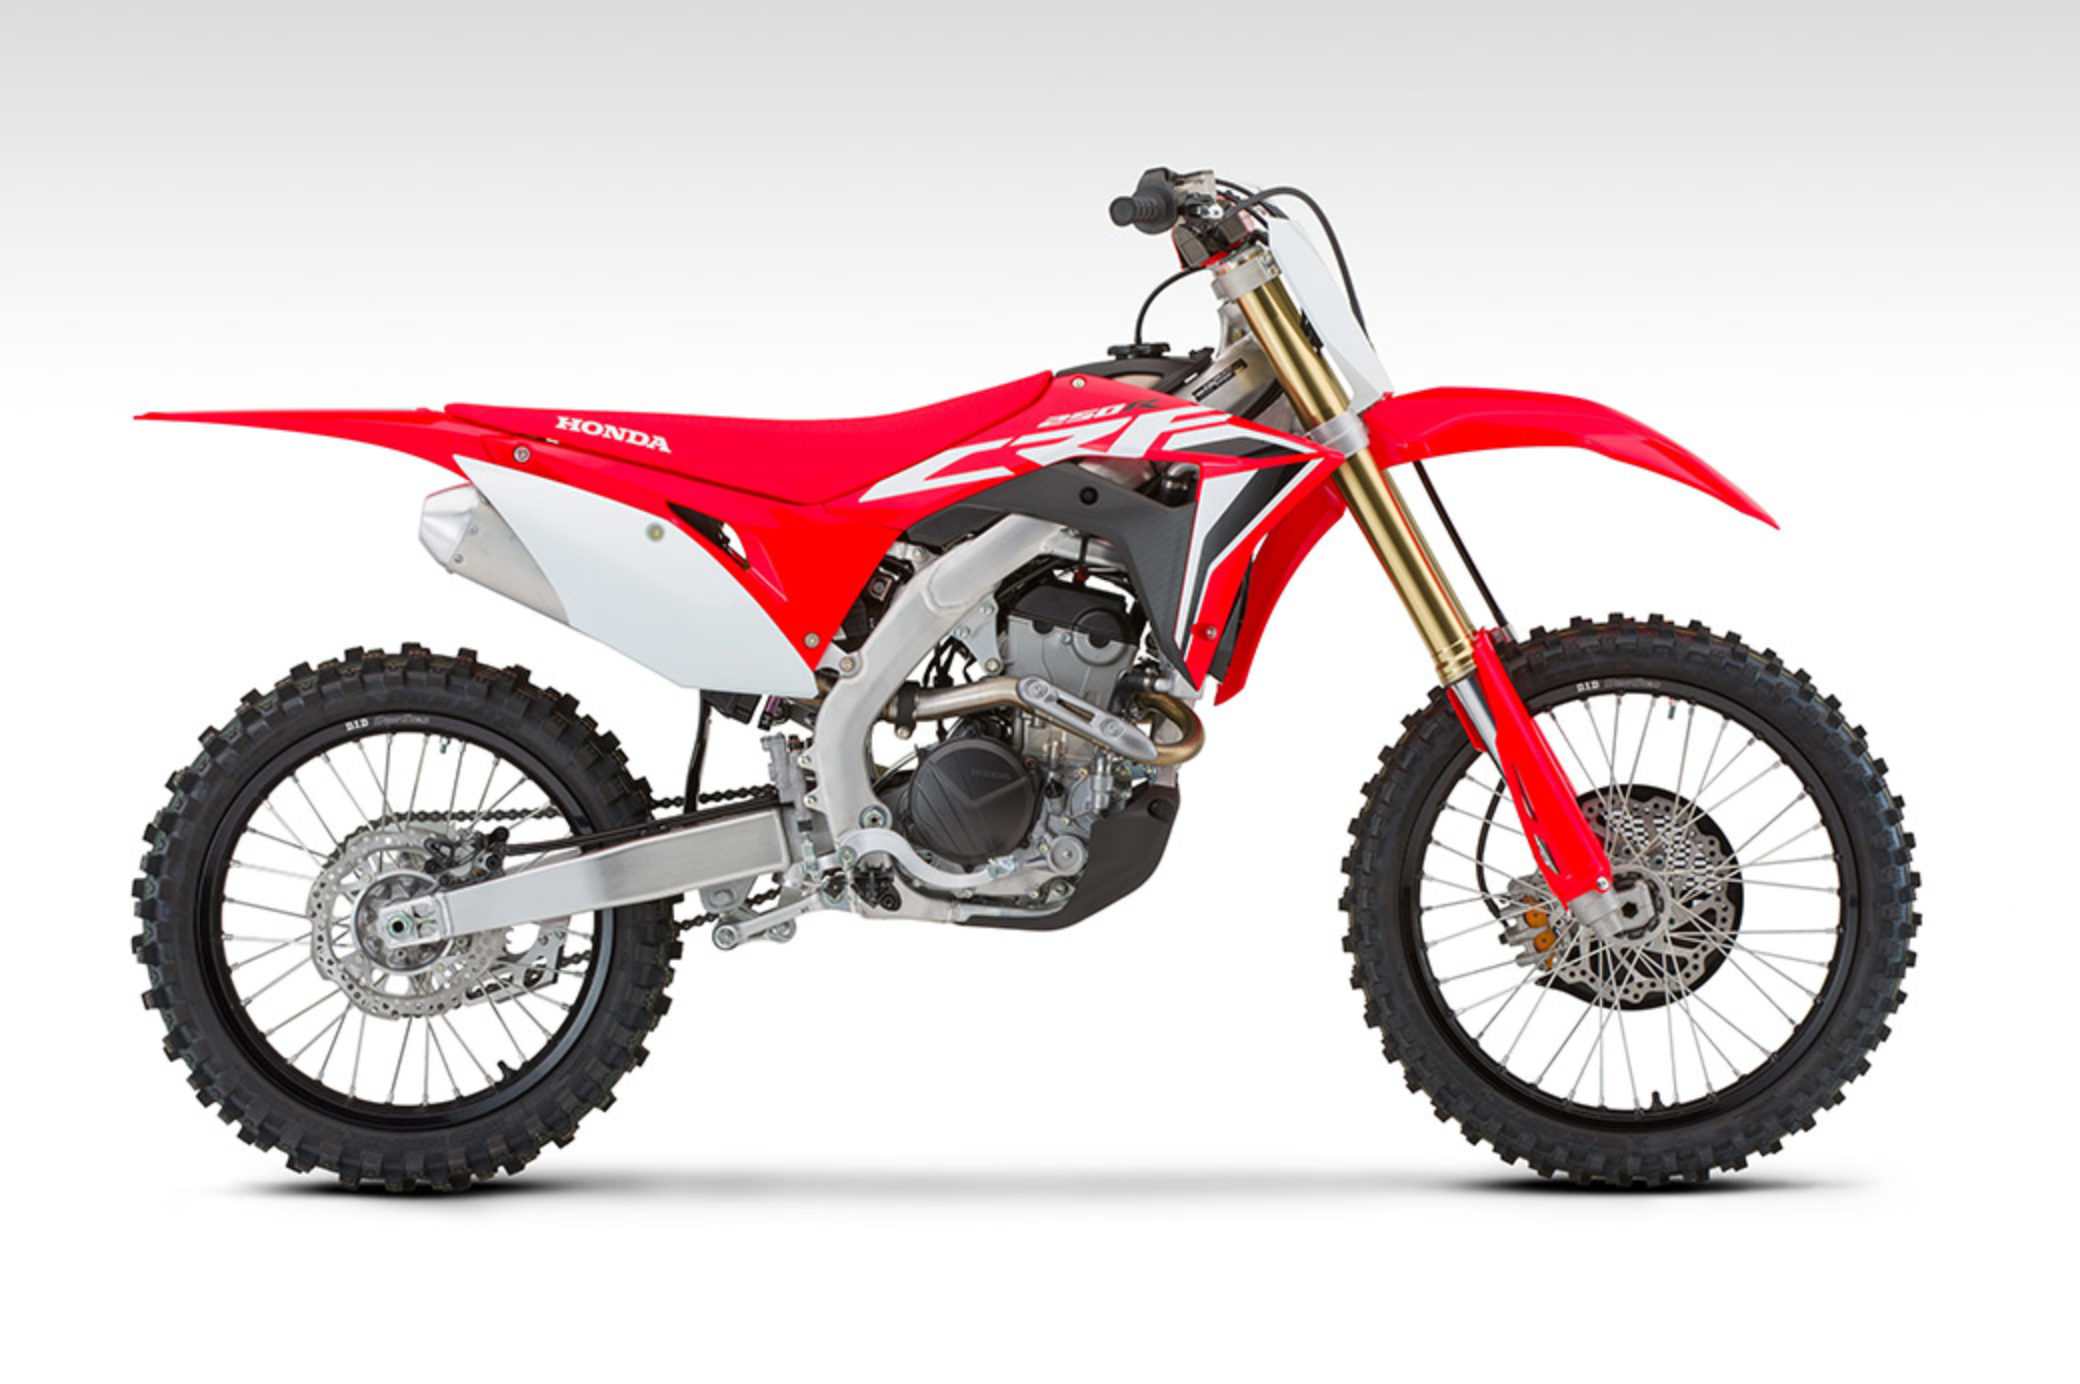 2020 Honda dirt bikes revealed